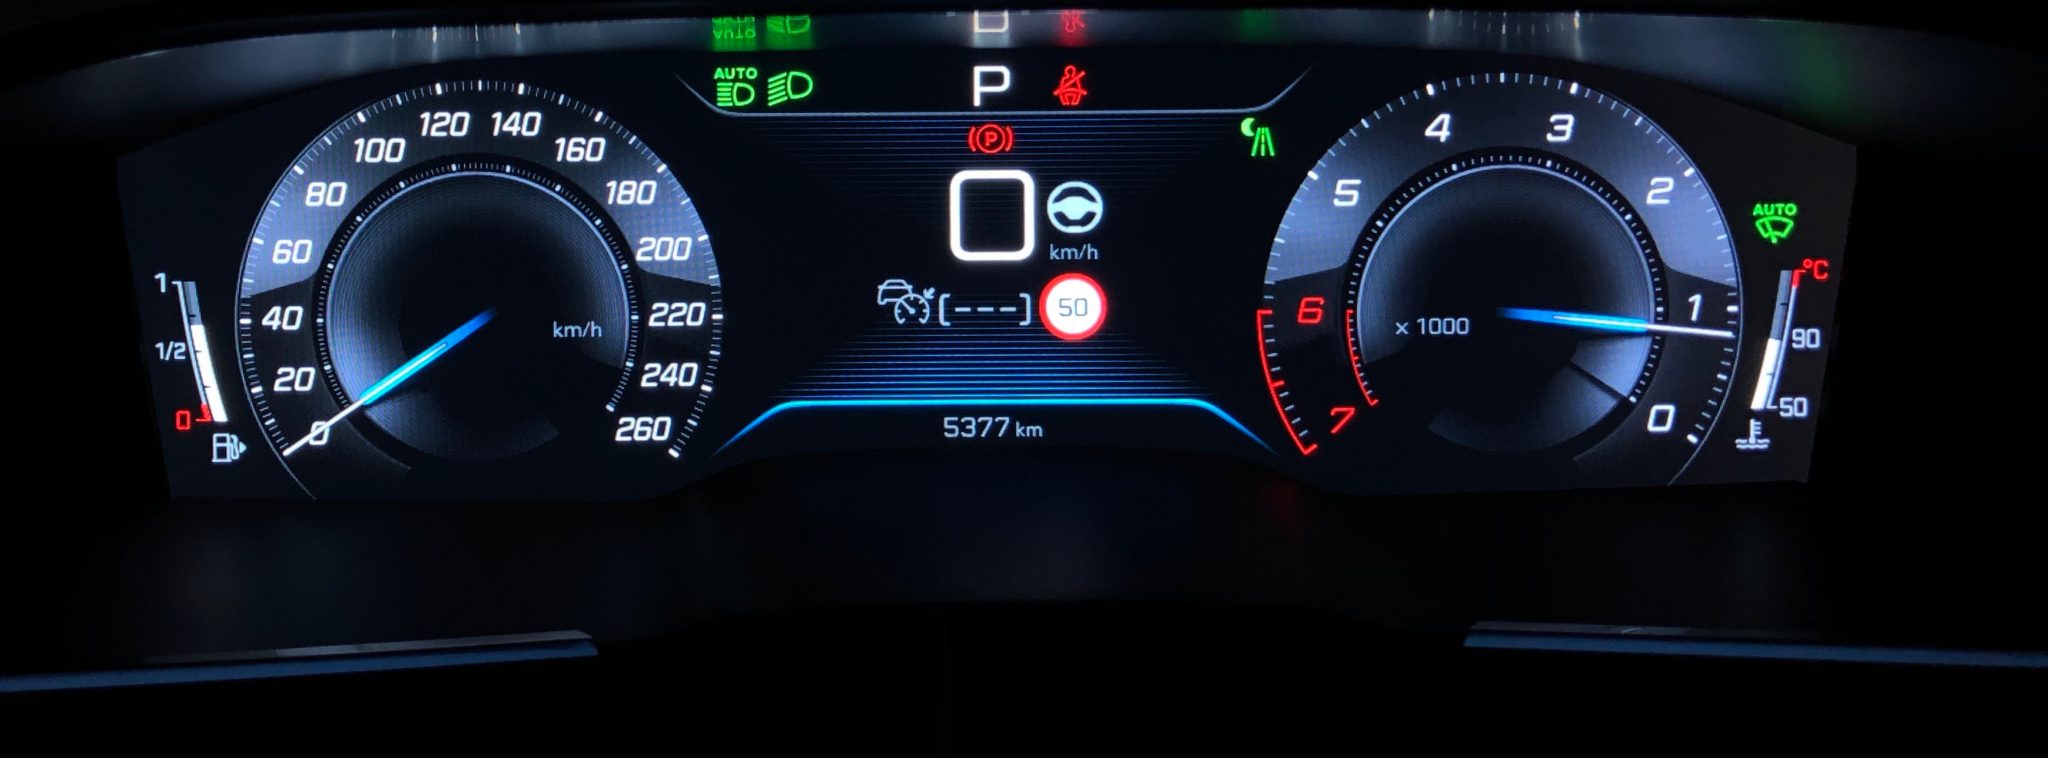 Relojes cuadro de instrumentos Peugeot 508 GT 2 - Peugeot 508 GT: Viene para quedarse